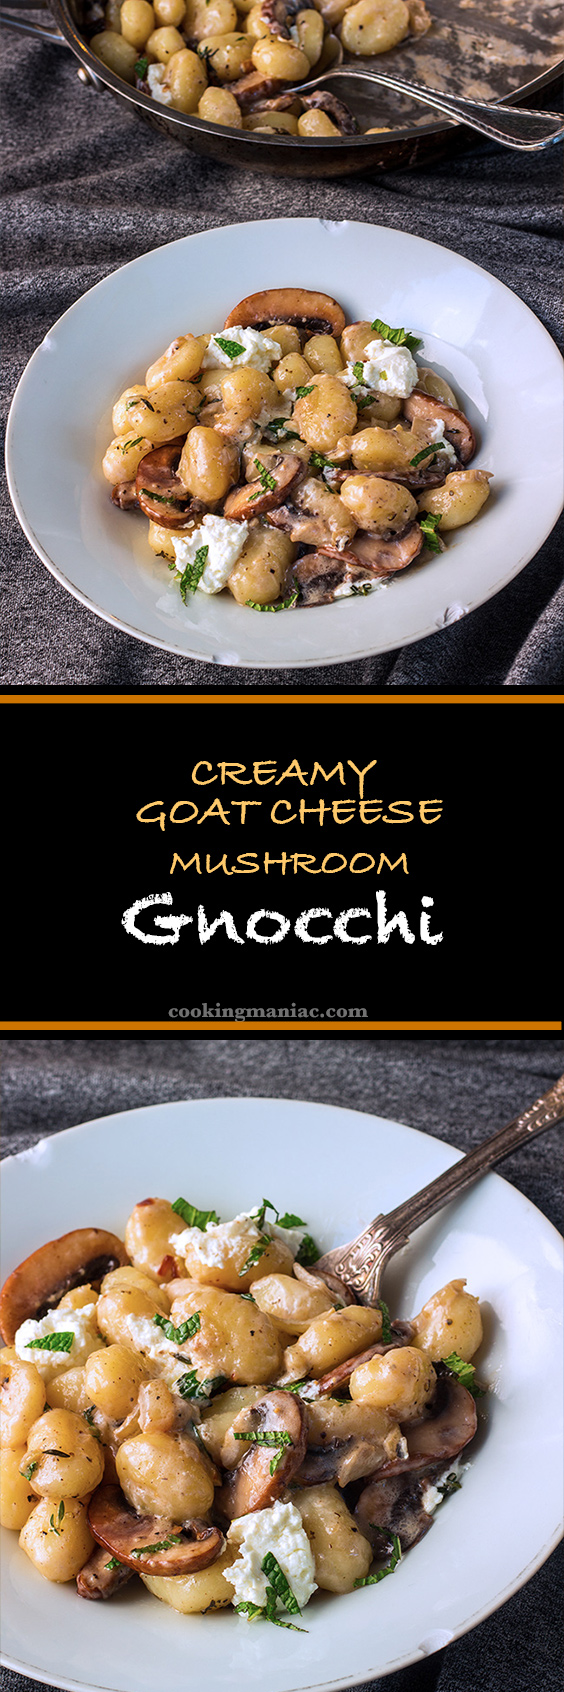 mushroom-Gnocchi